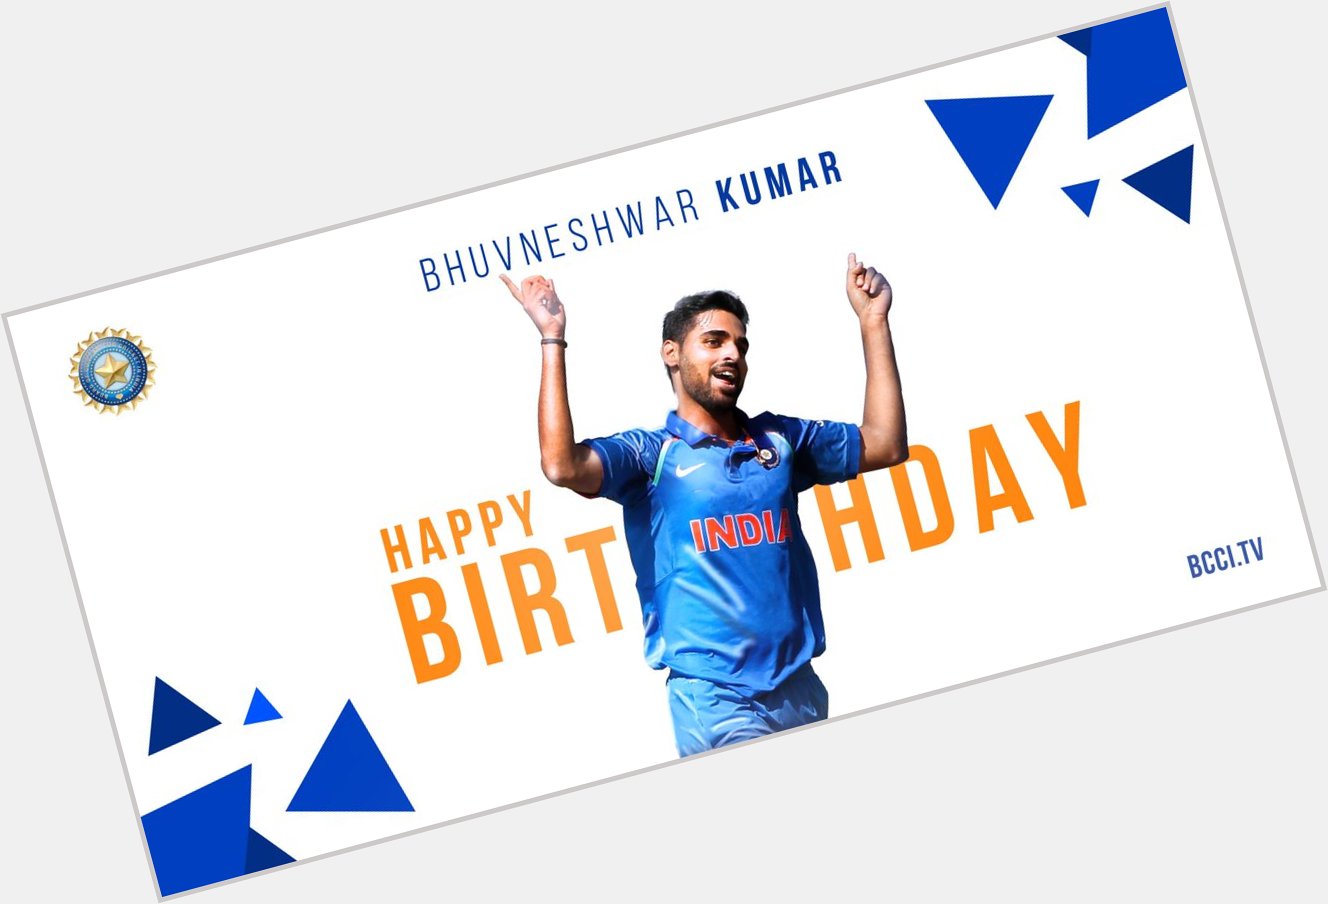 Happy birthday Bhuvneshwar Kumar 